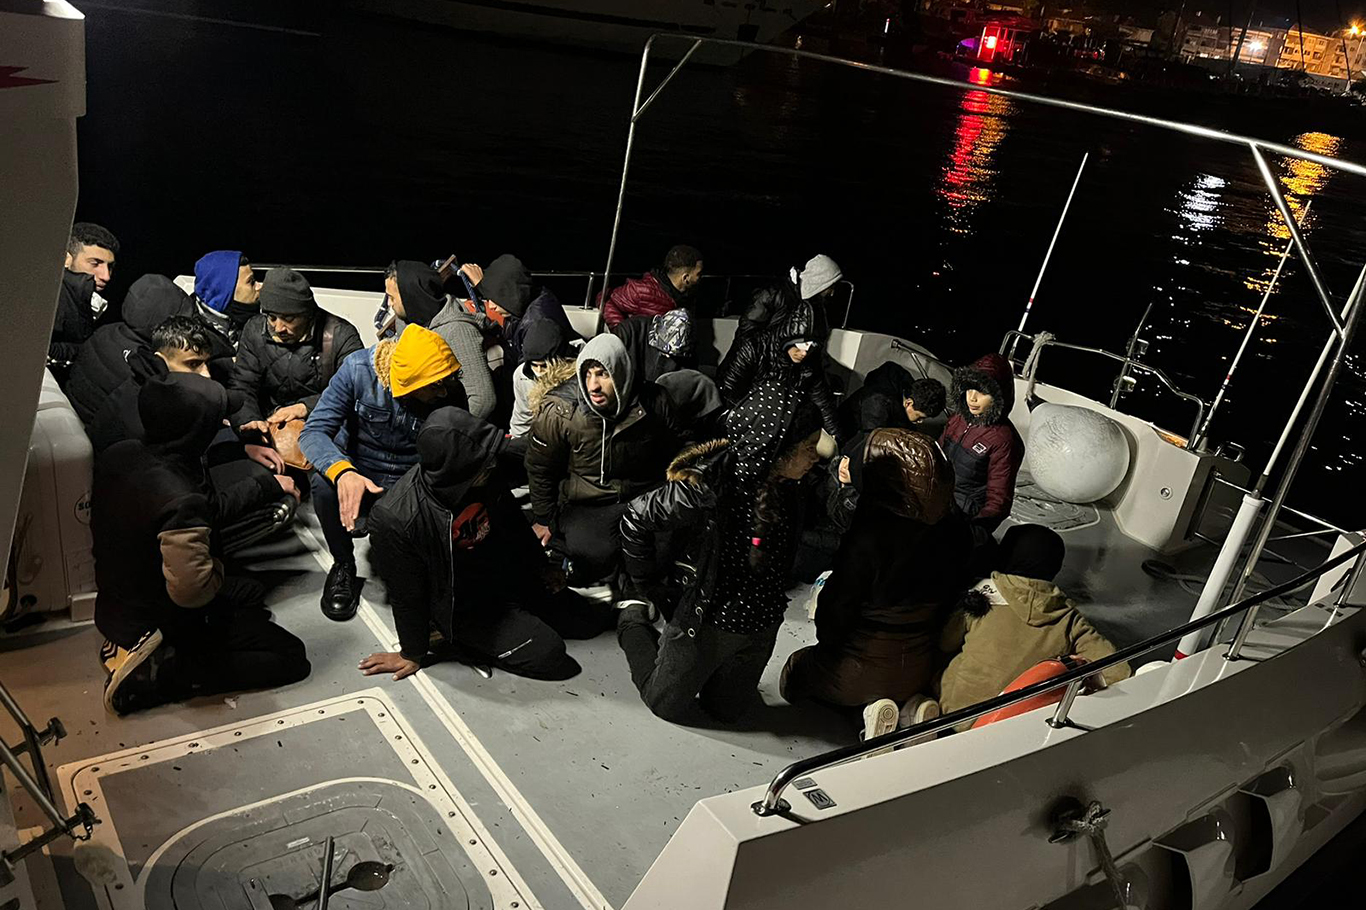 261 irregular migrants rescued off Aegean Sea coast—Turkish coast guard